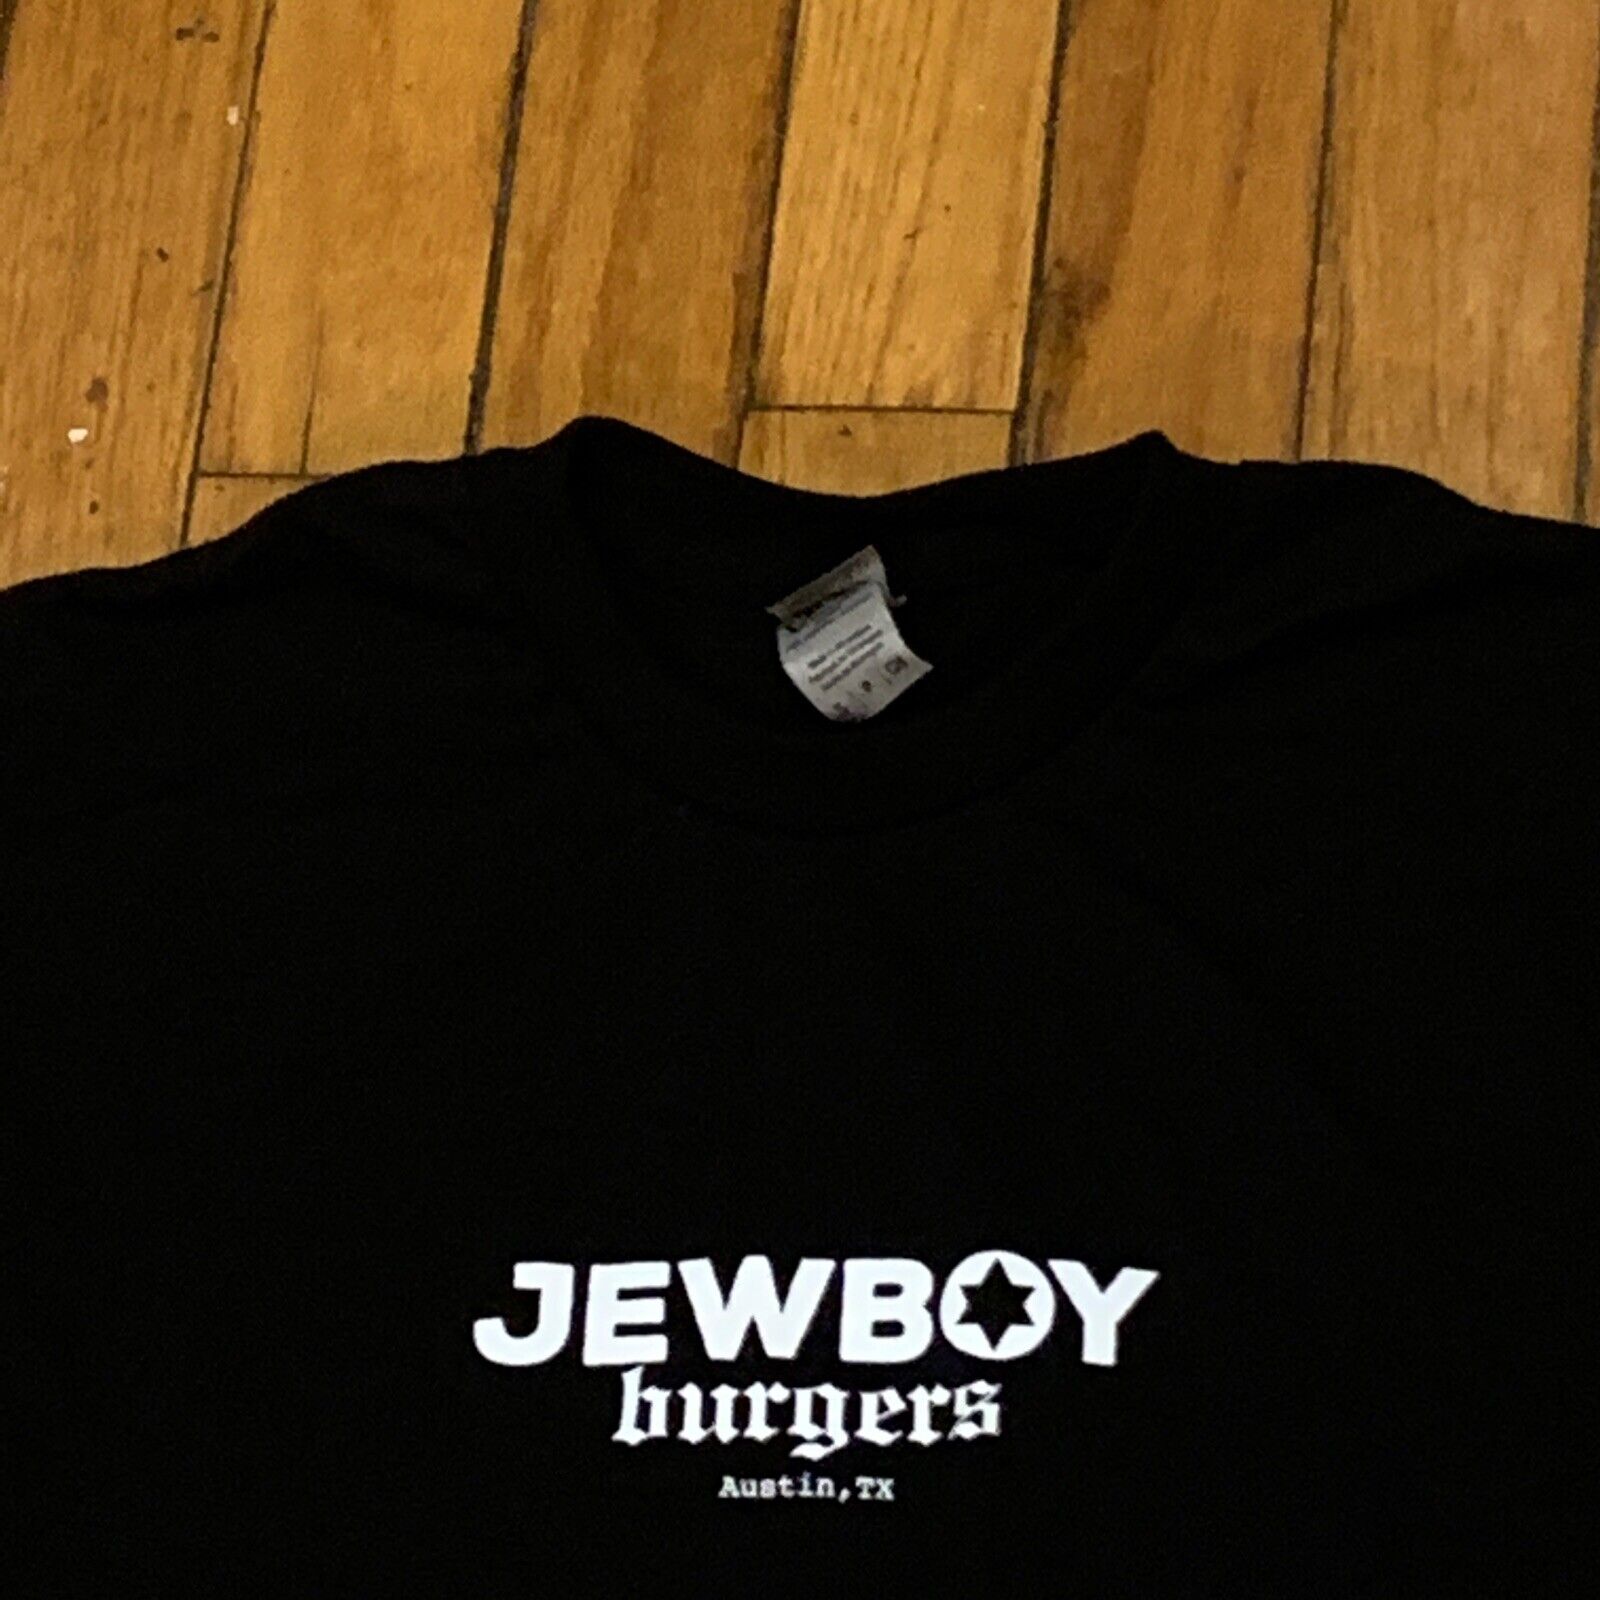 Jewboy Burgers Austin Texas Black T-Shirt Small R… - image 1